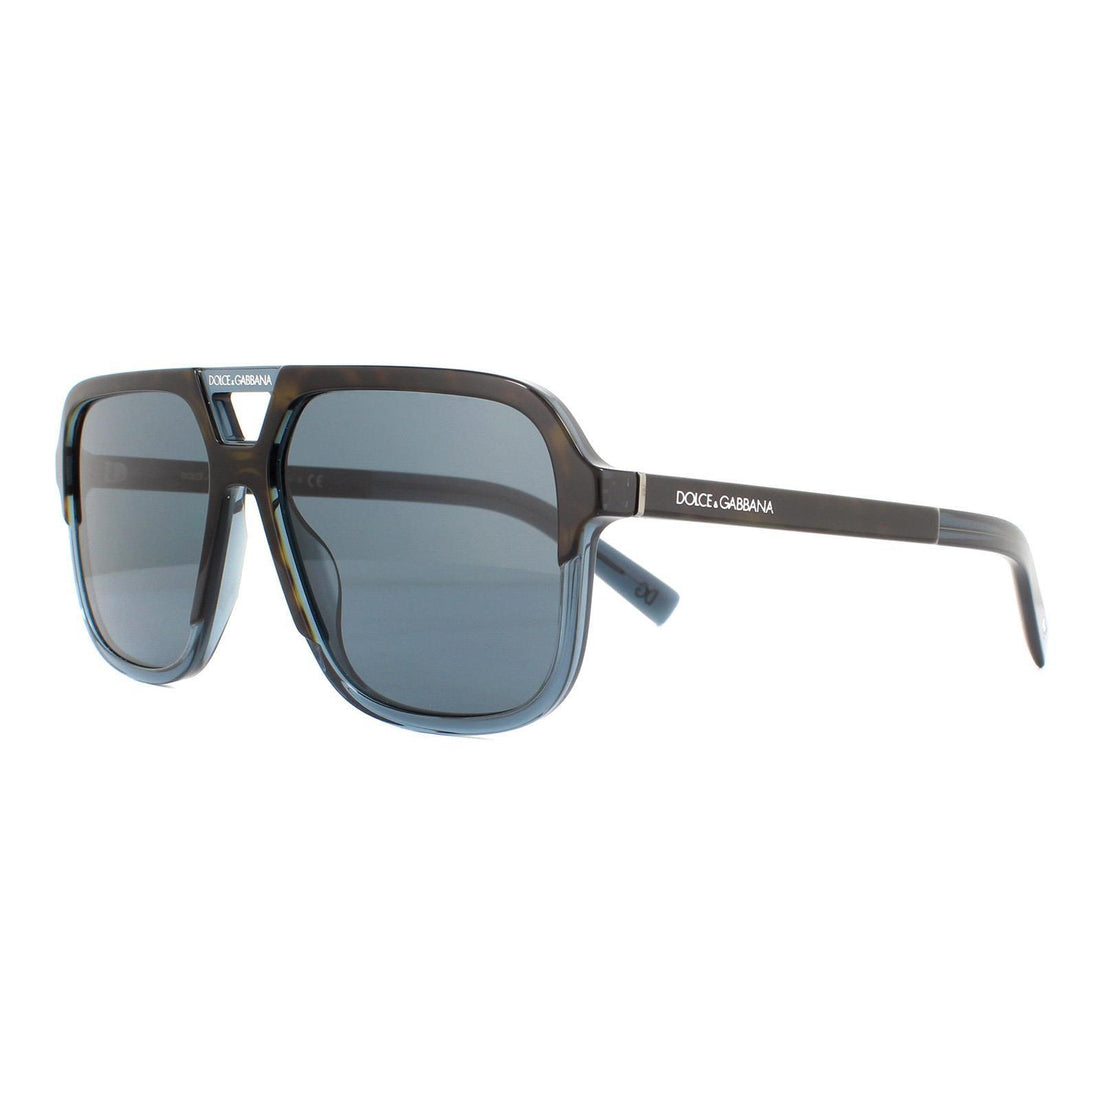 Dolce & Gabbana Sunglasses DG4354 320980 Havana Transparent Blue Brown Gradient